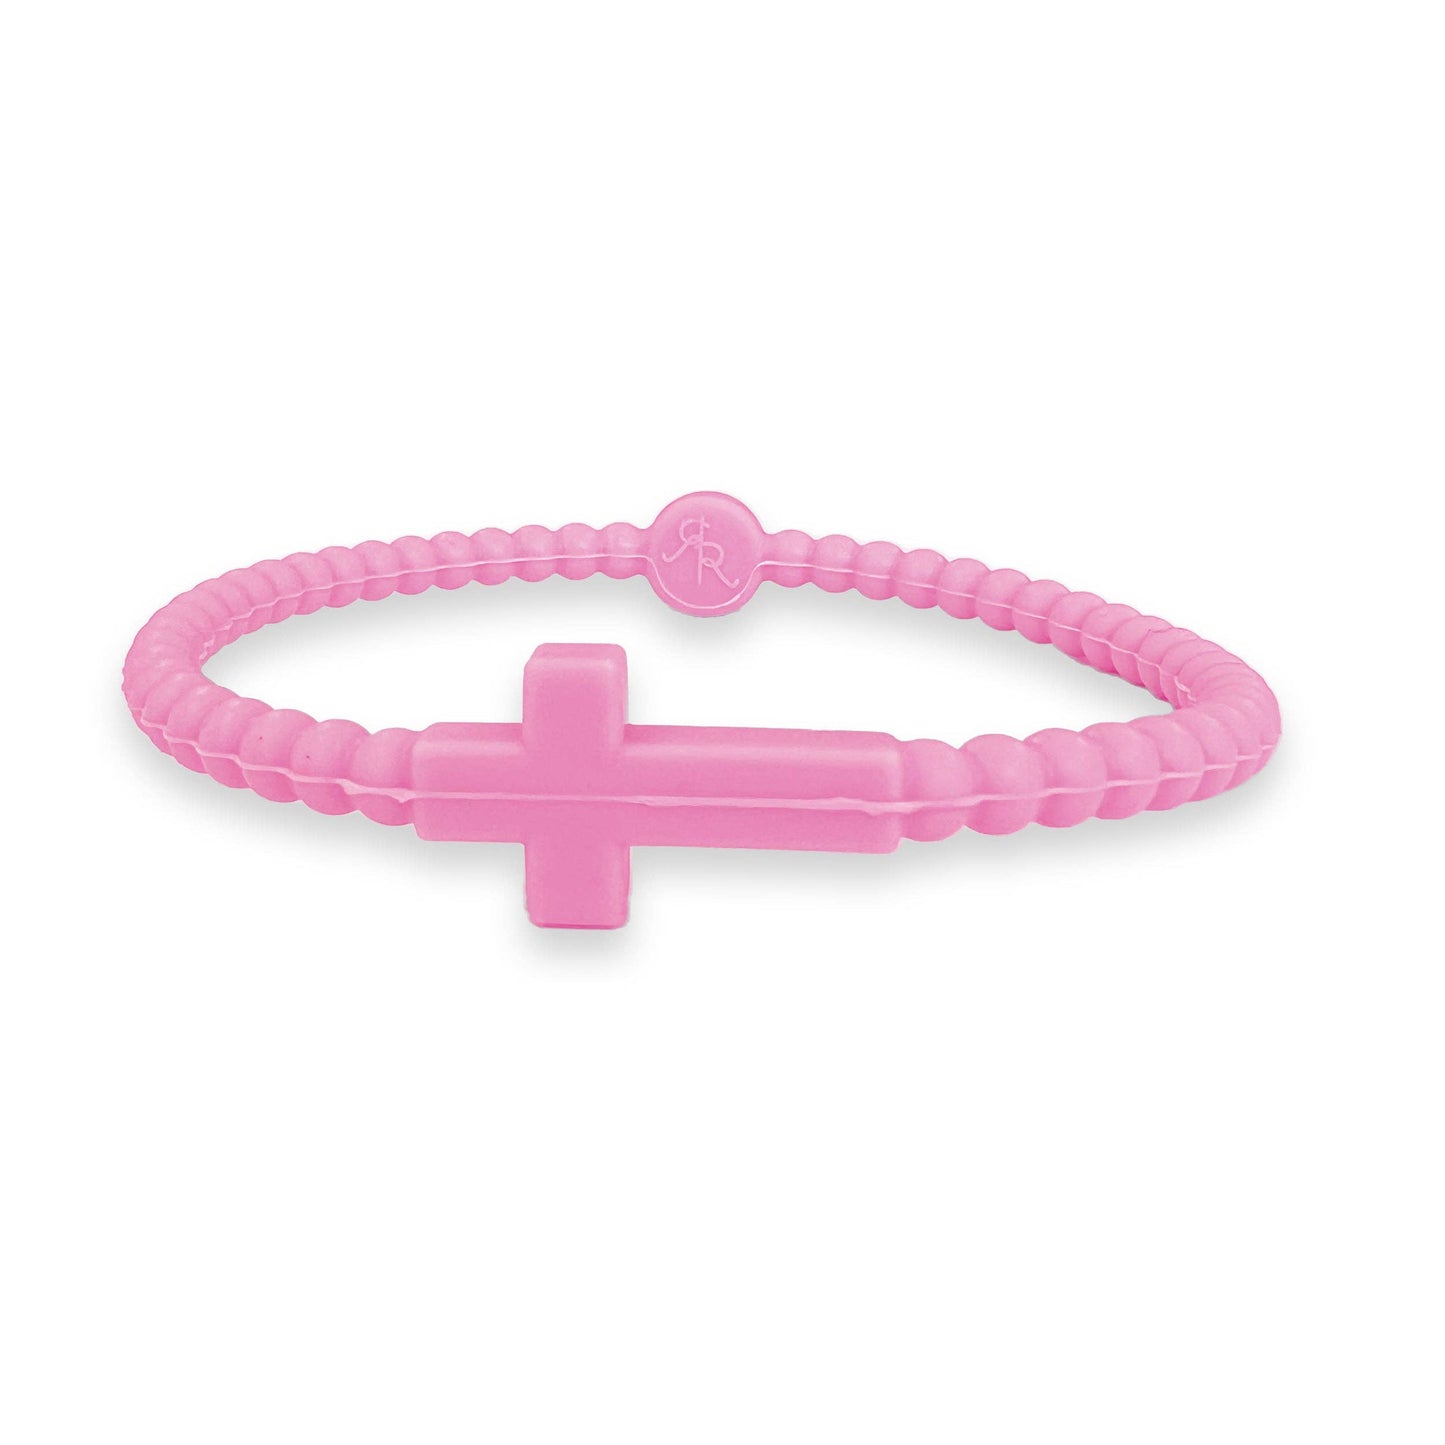 Jesus Bracelets - Singles - Malibu pink